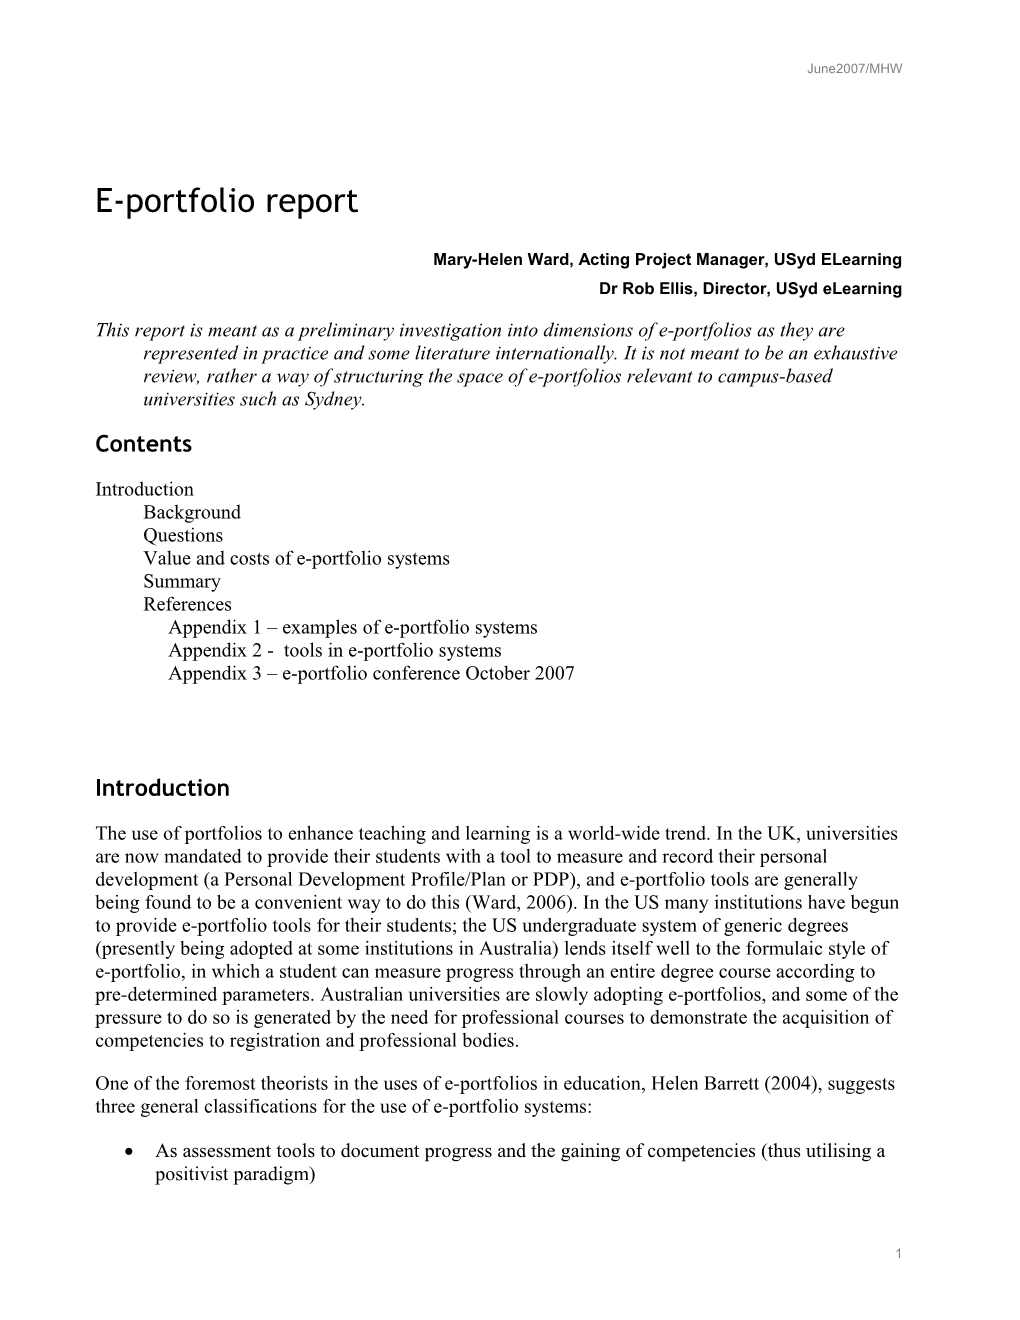 Eportfolio Draft Report